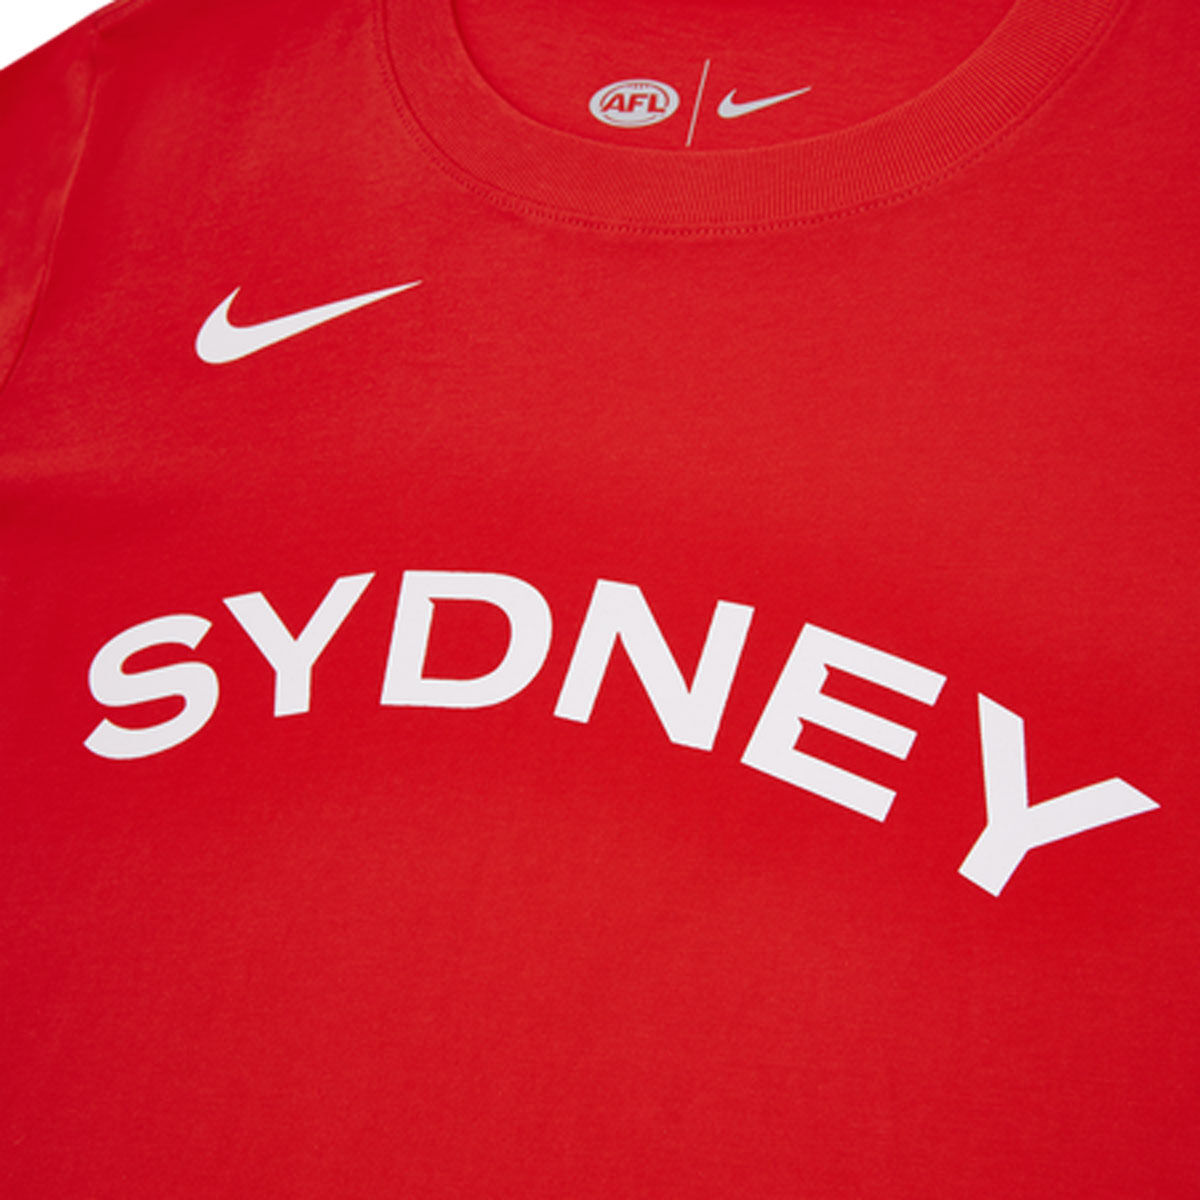 Women's Fanatics Branded Red Philadelphia Phillies Static Logo V-Neck T-Shirt Size: Large